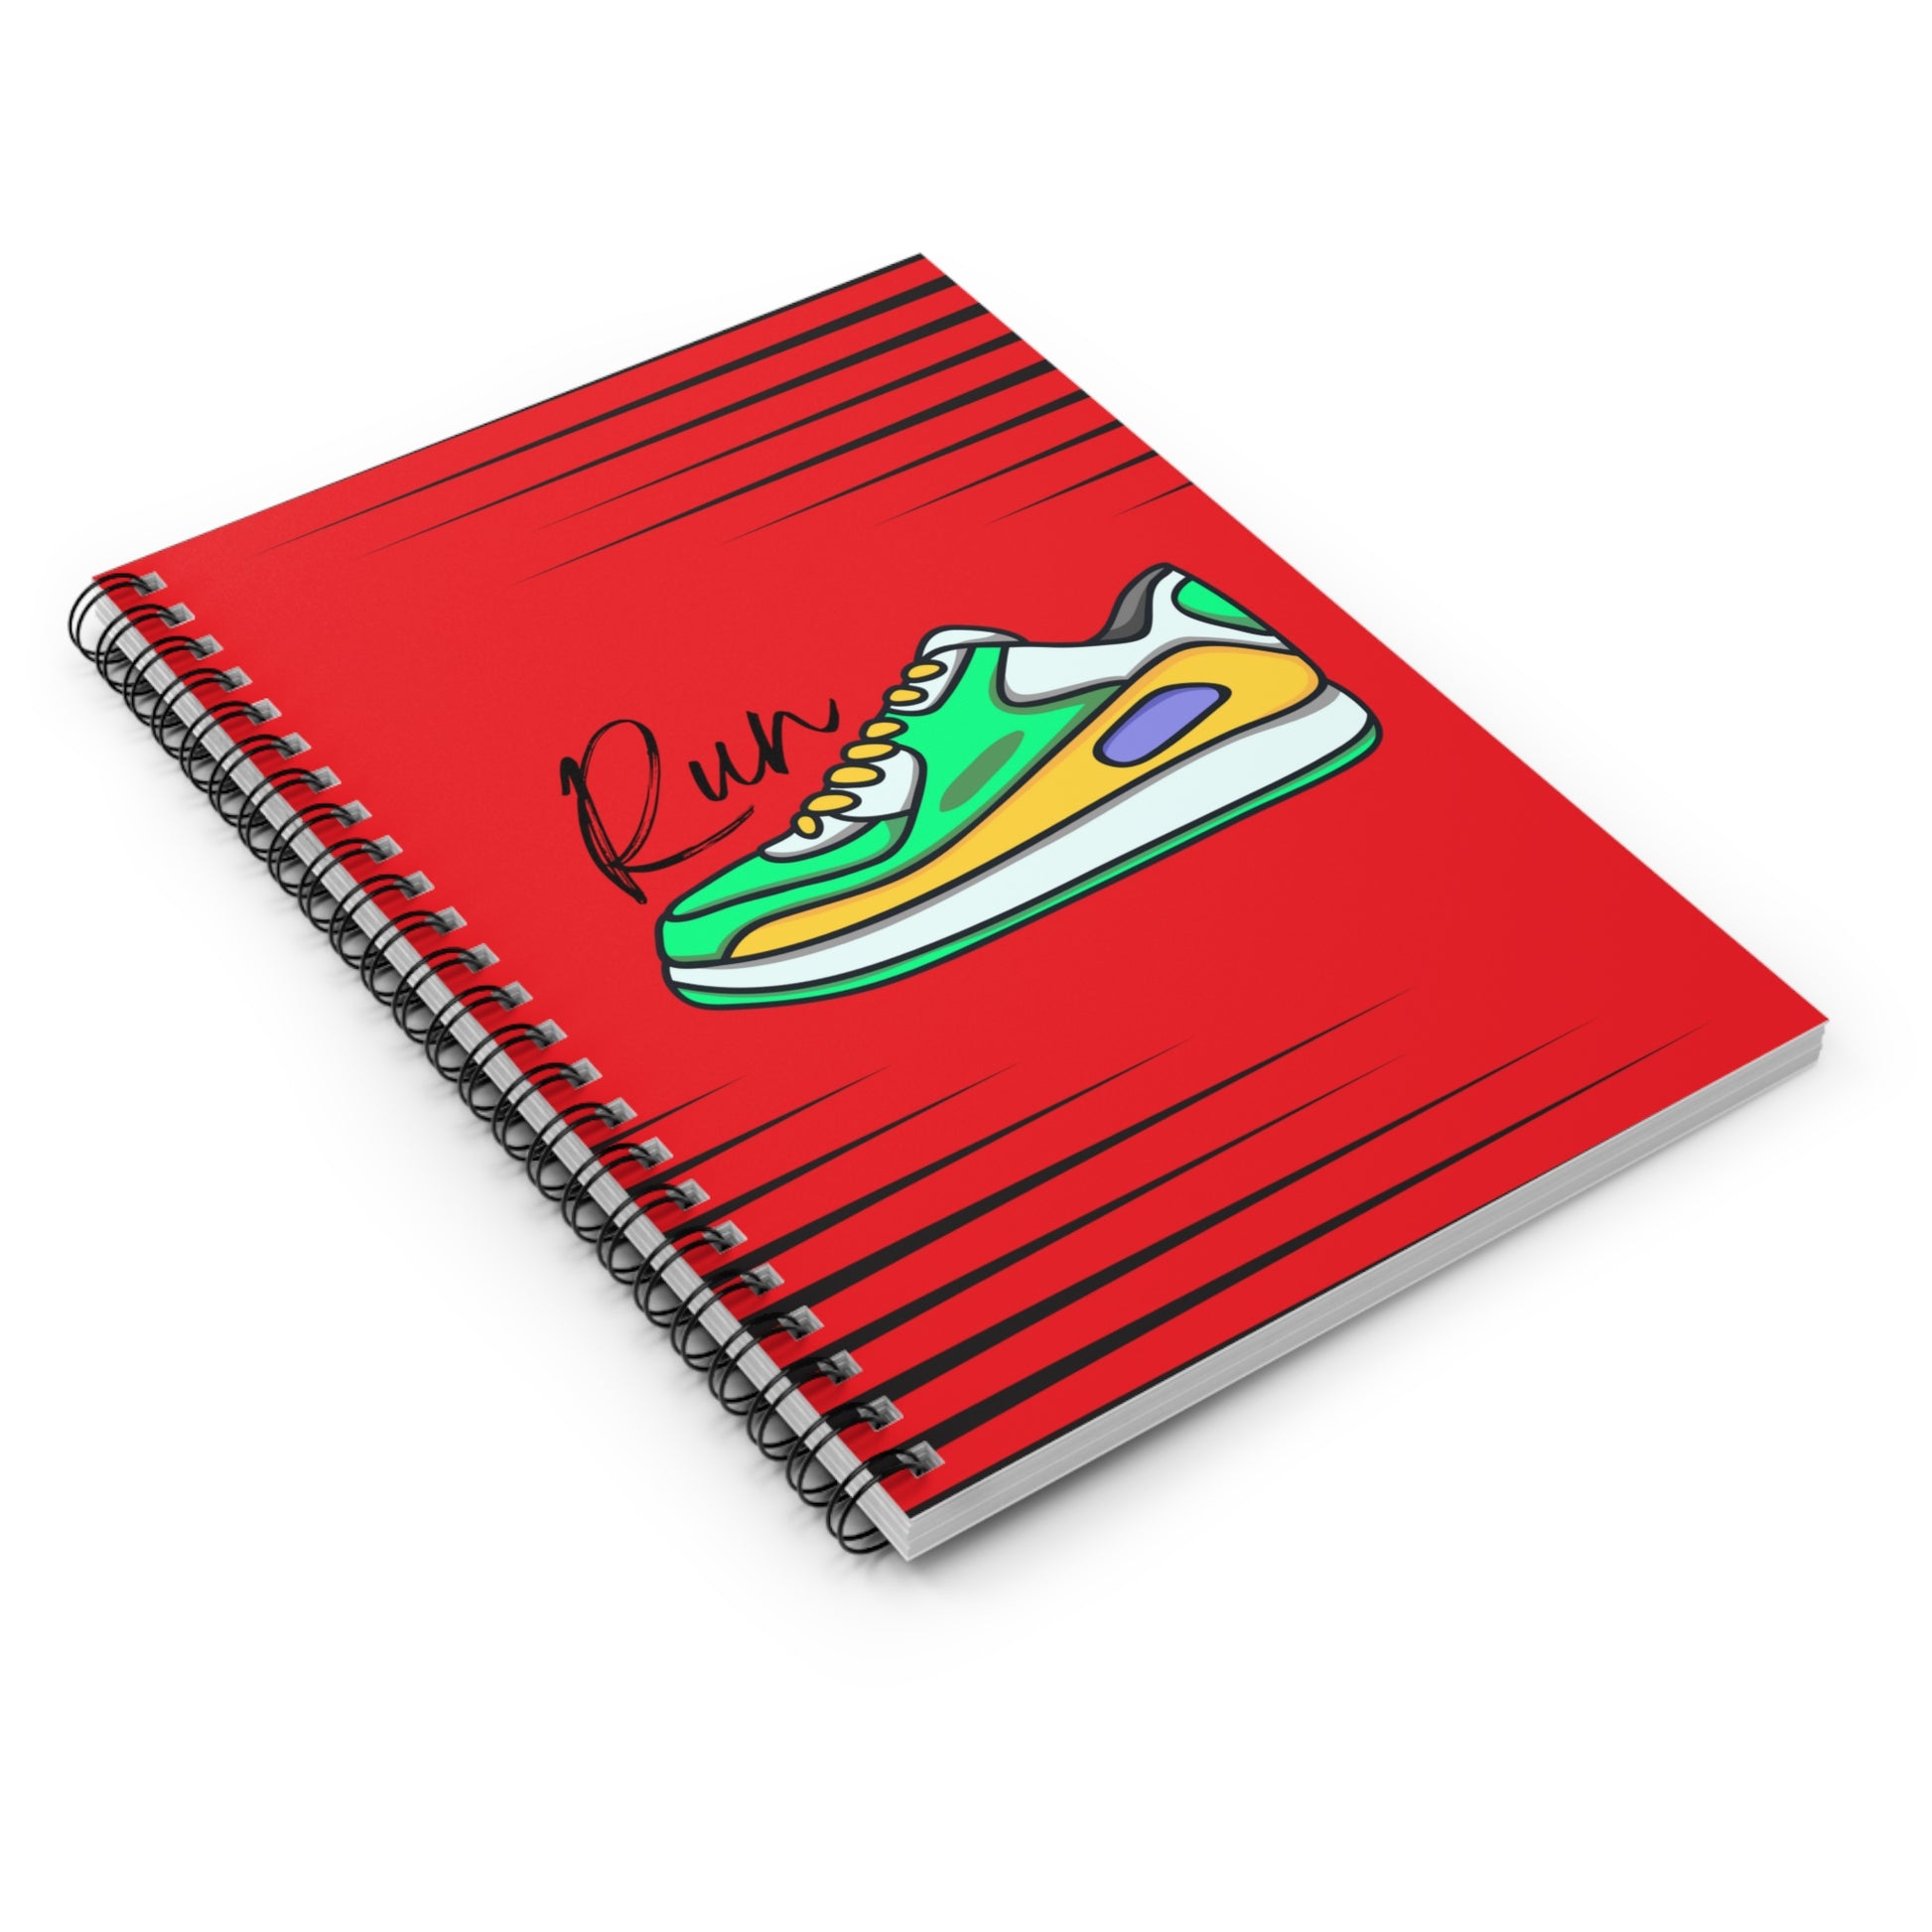 Run: Spiral Notebook - Log Books - Journals - Diaries - and More Custom Printed by TheGlassyLass.com